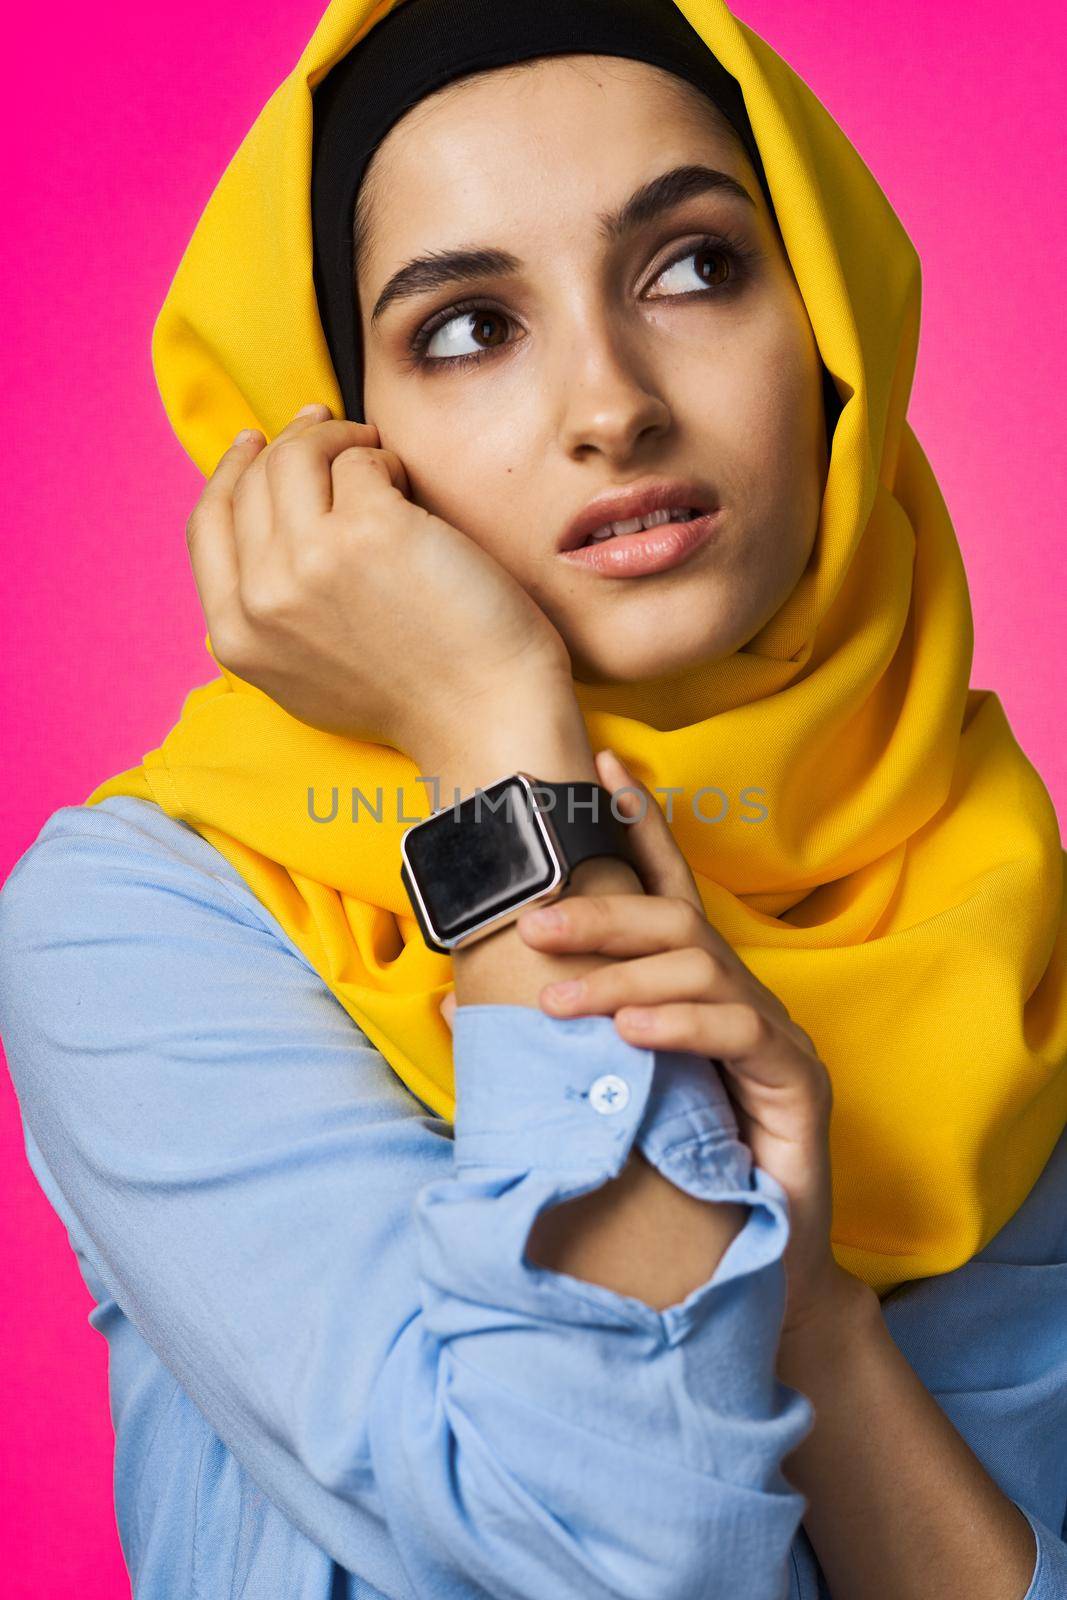 muslim woman with smart watch technology posing pink background by Vichizh